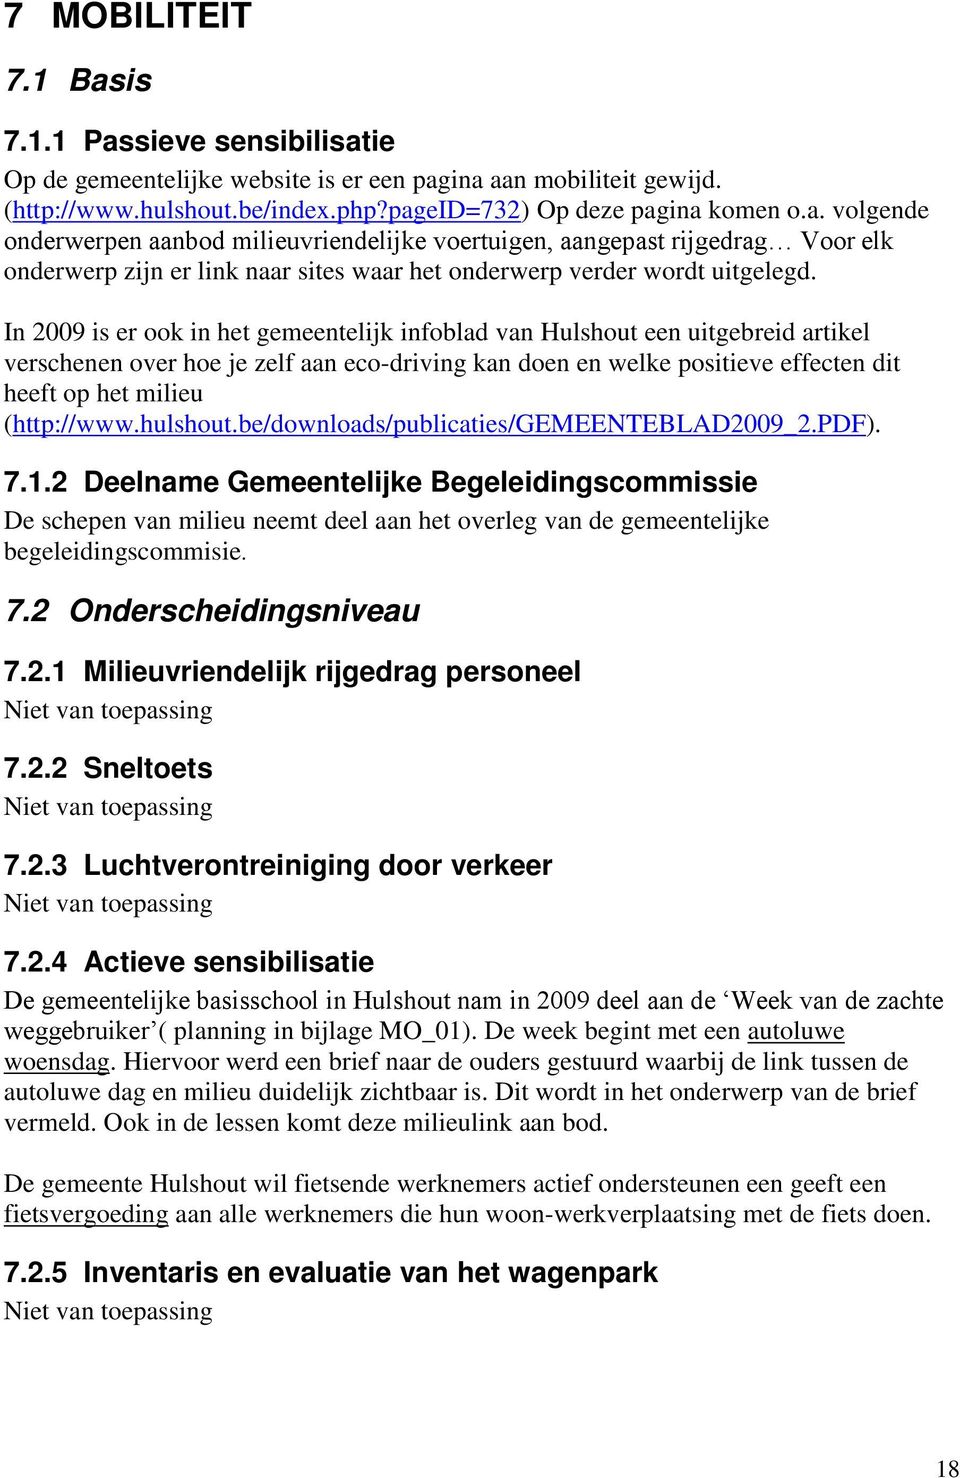 hulshout.be/downloads/publicaties/gemeenteblad2009_2.pdf). 7.1.